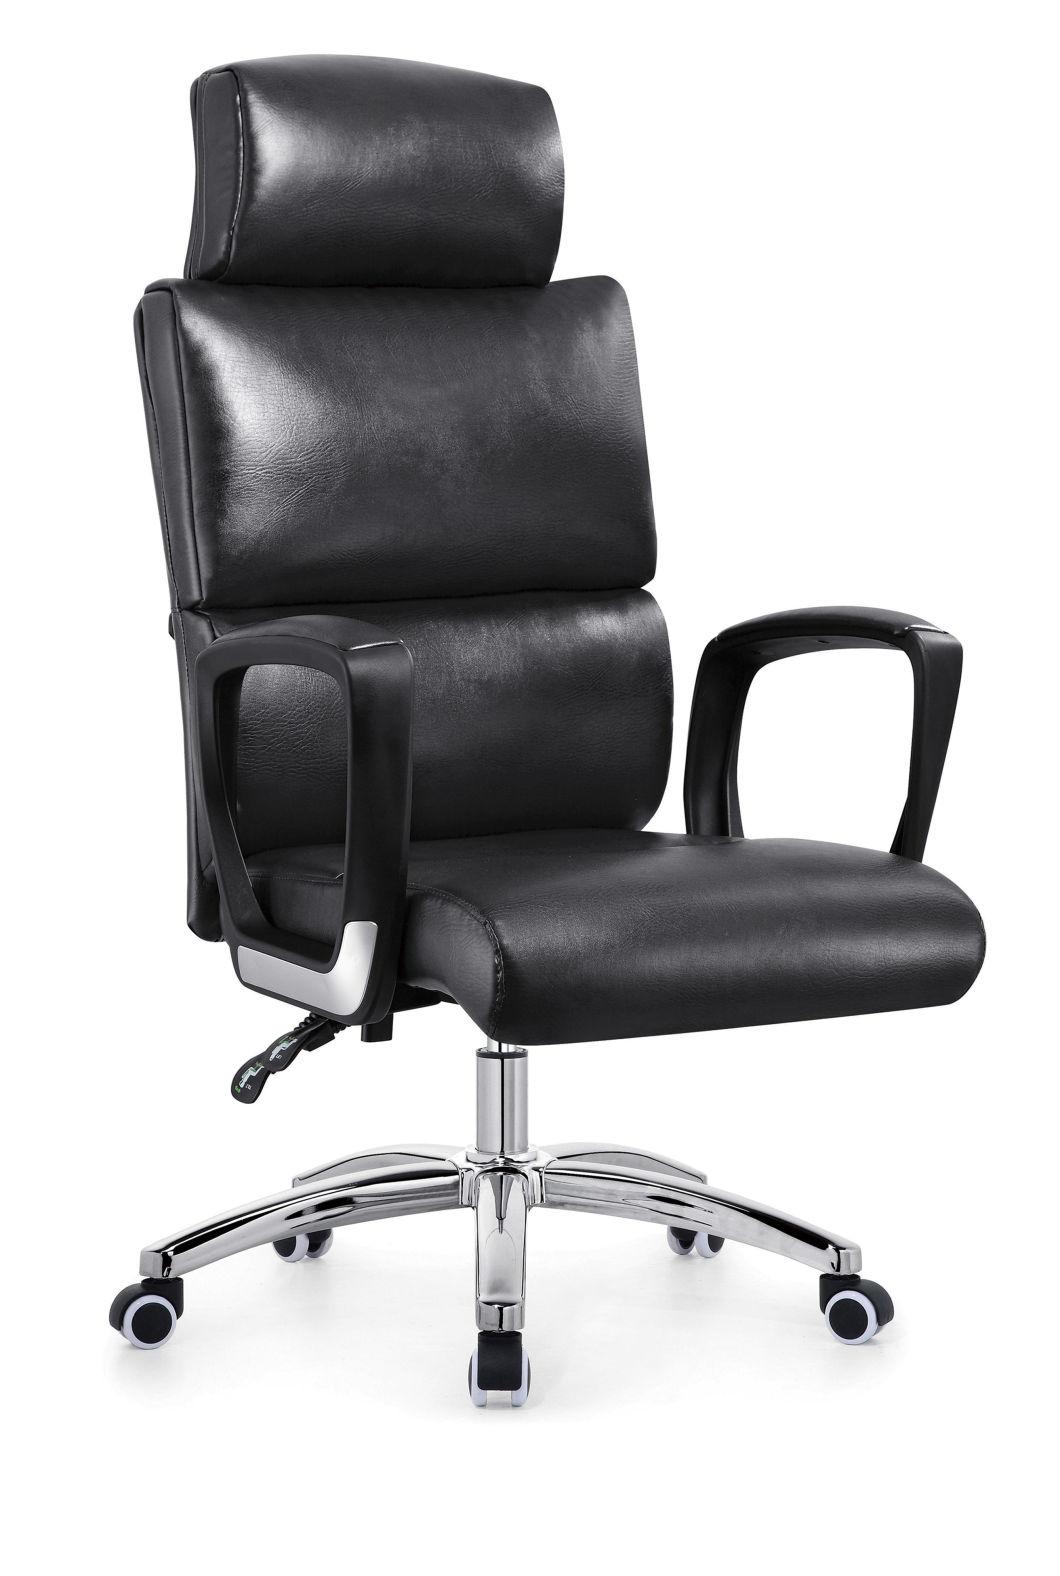 Ergonomic Swivel Office Chair PU Leather Excutive Revolving Chair-1819